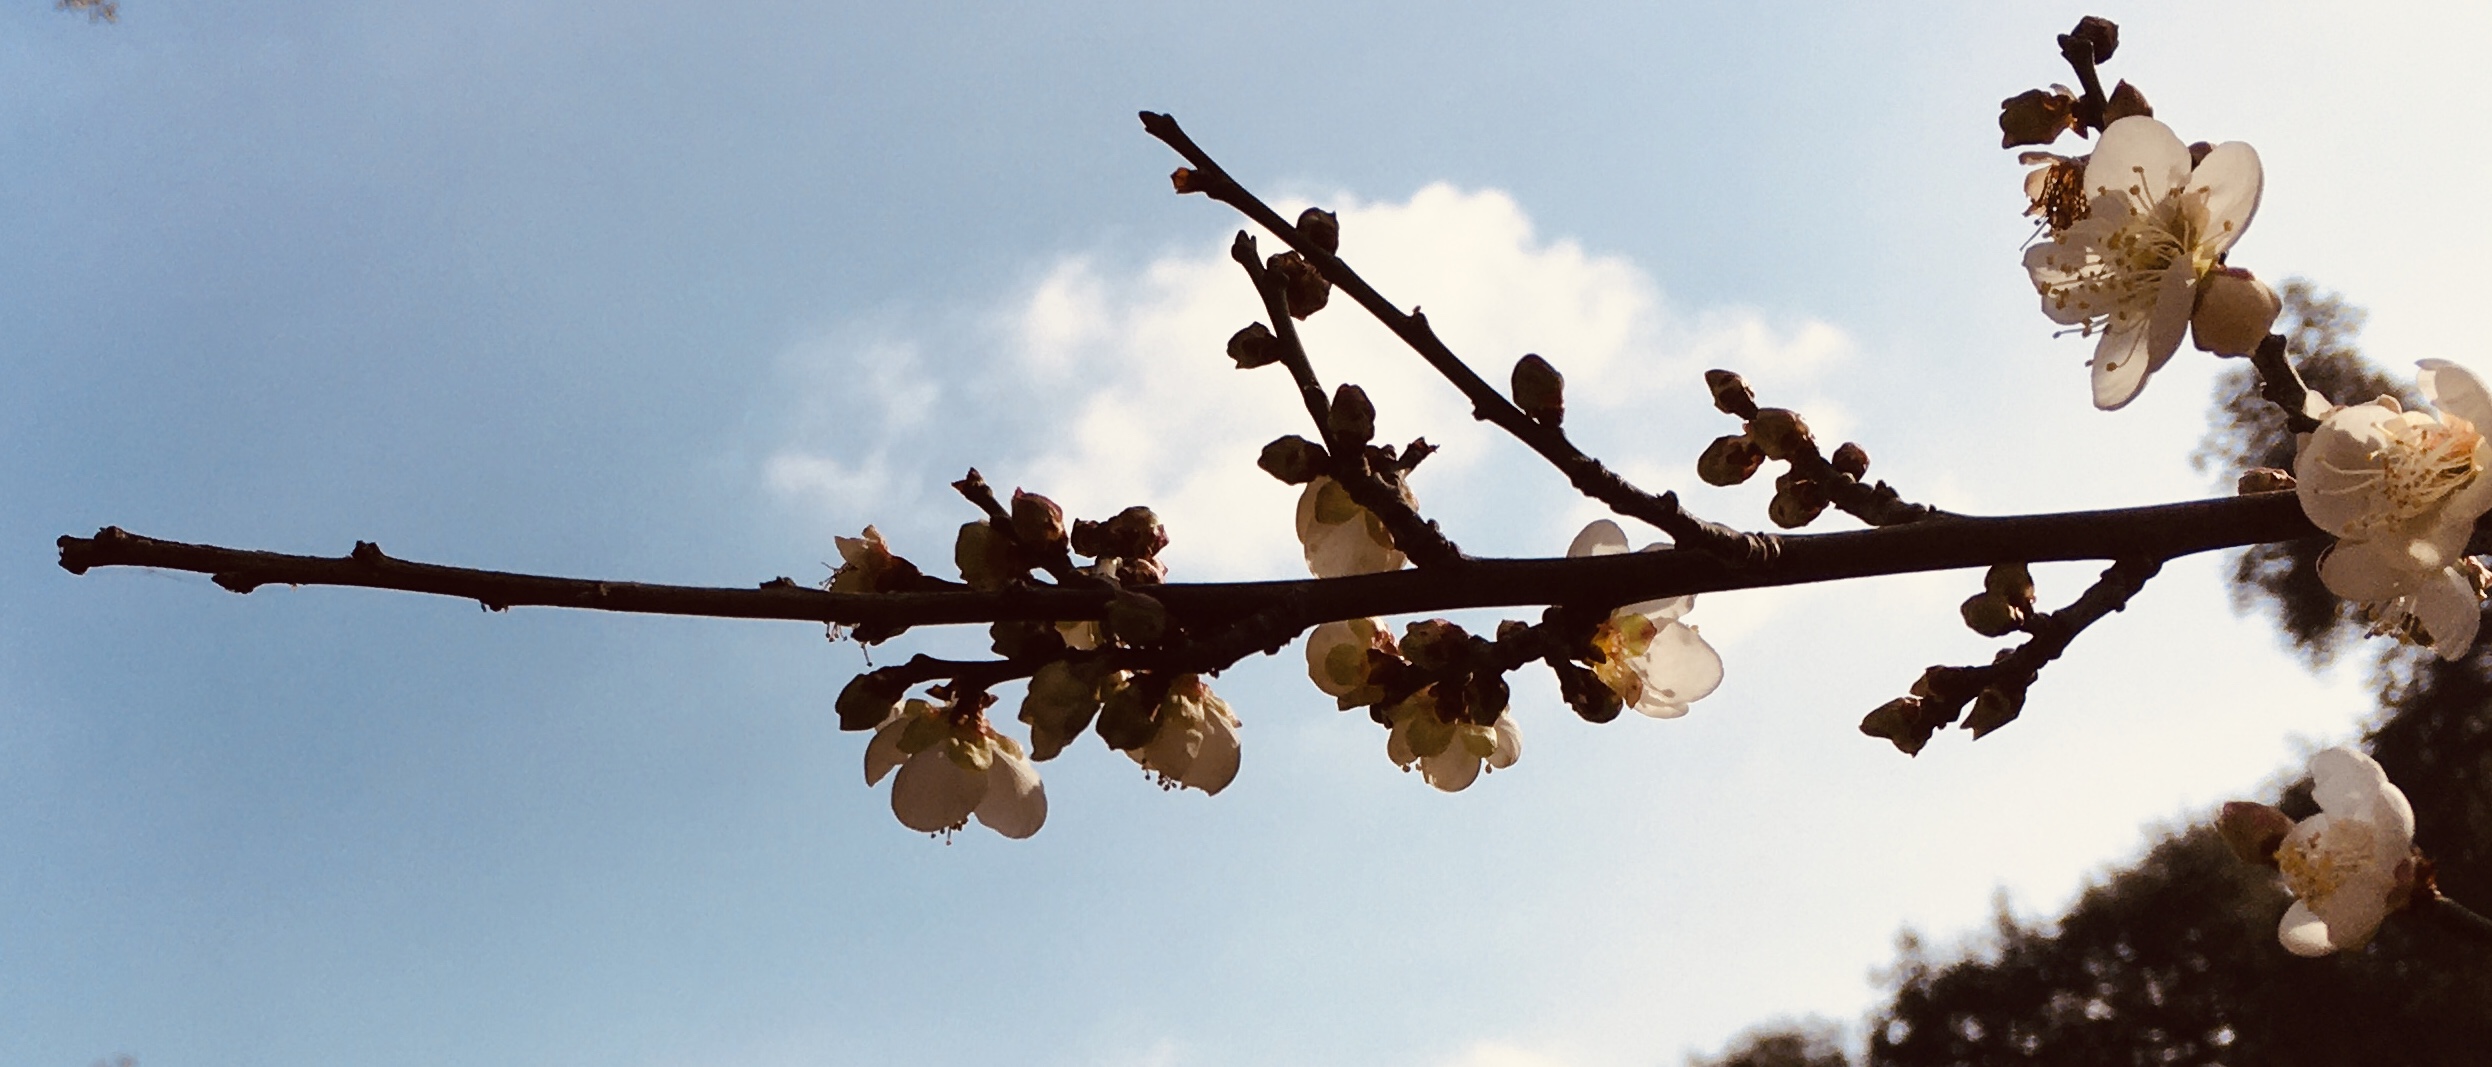 Huntington Library, Japanese Garden - Plum Blossoms